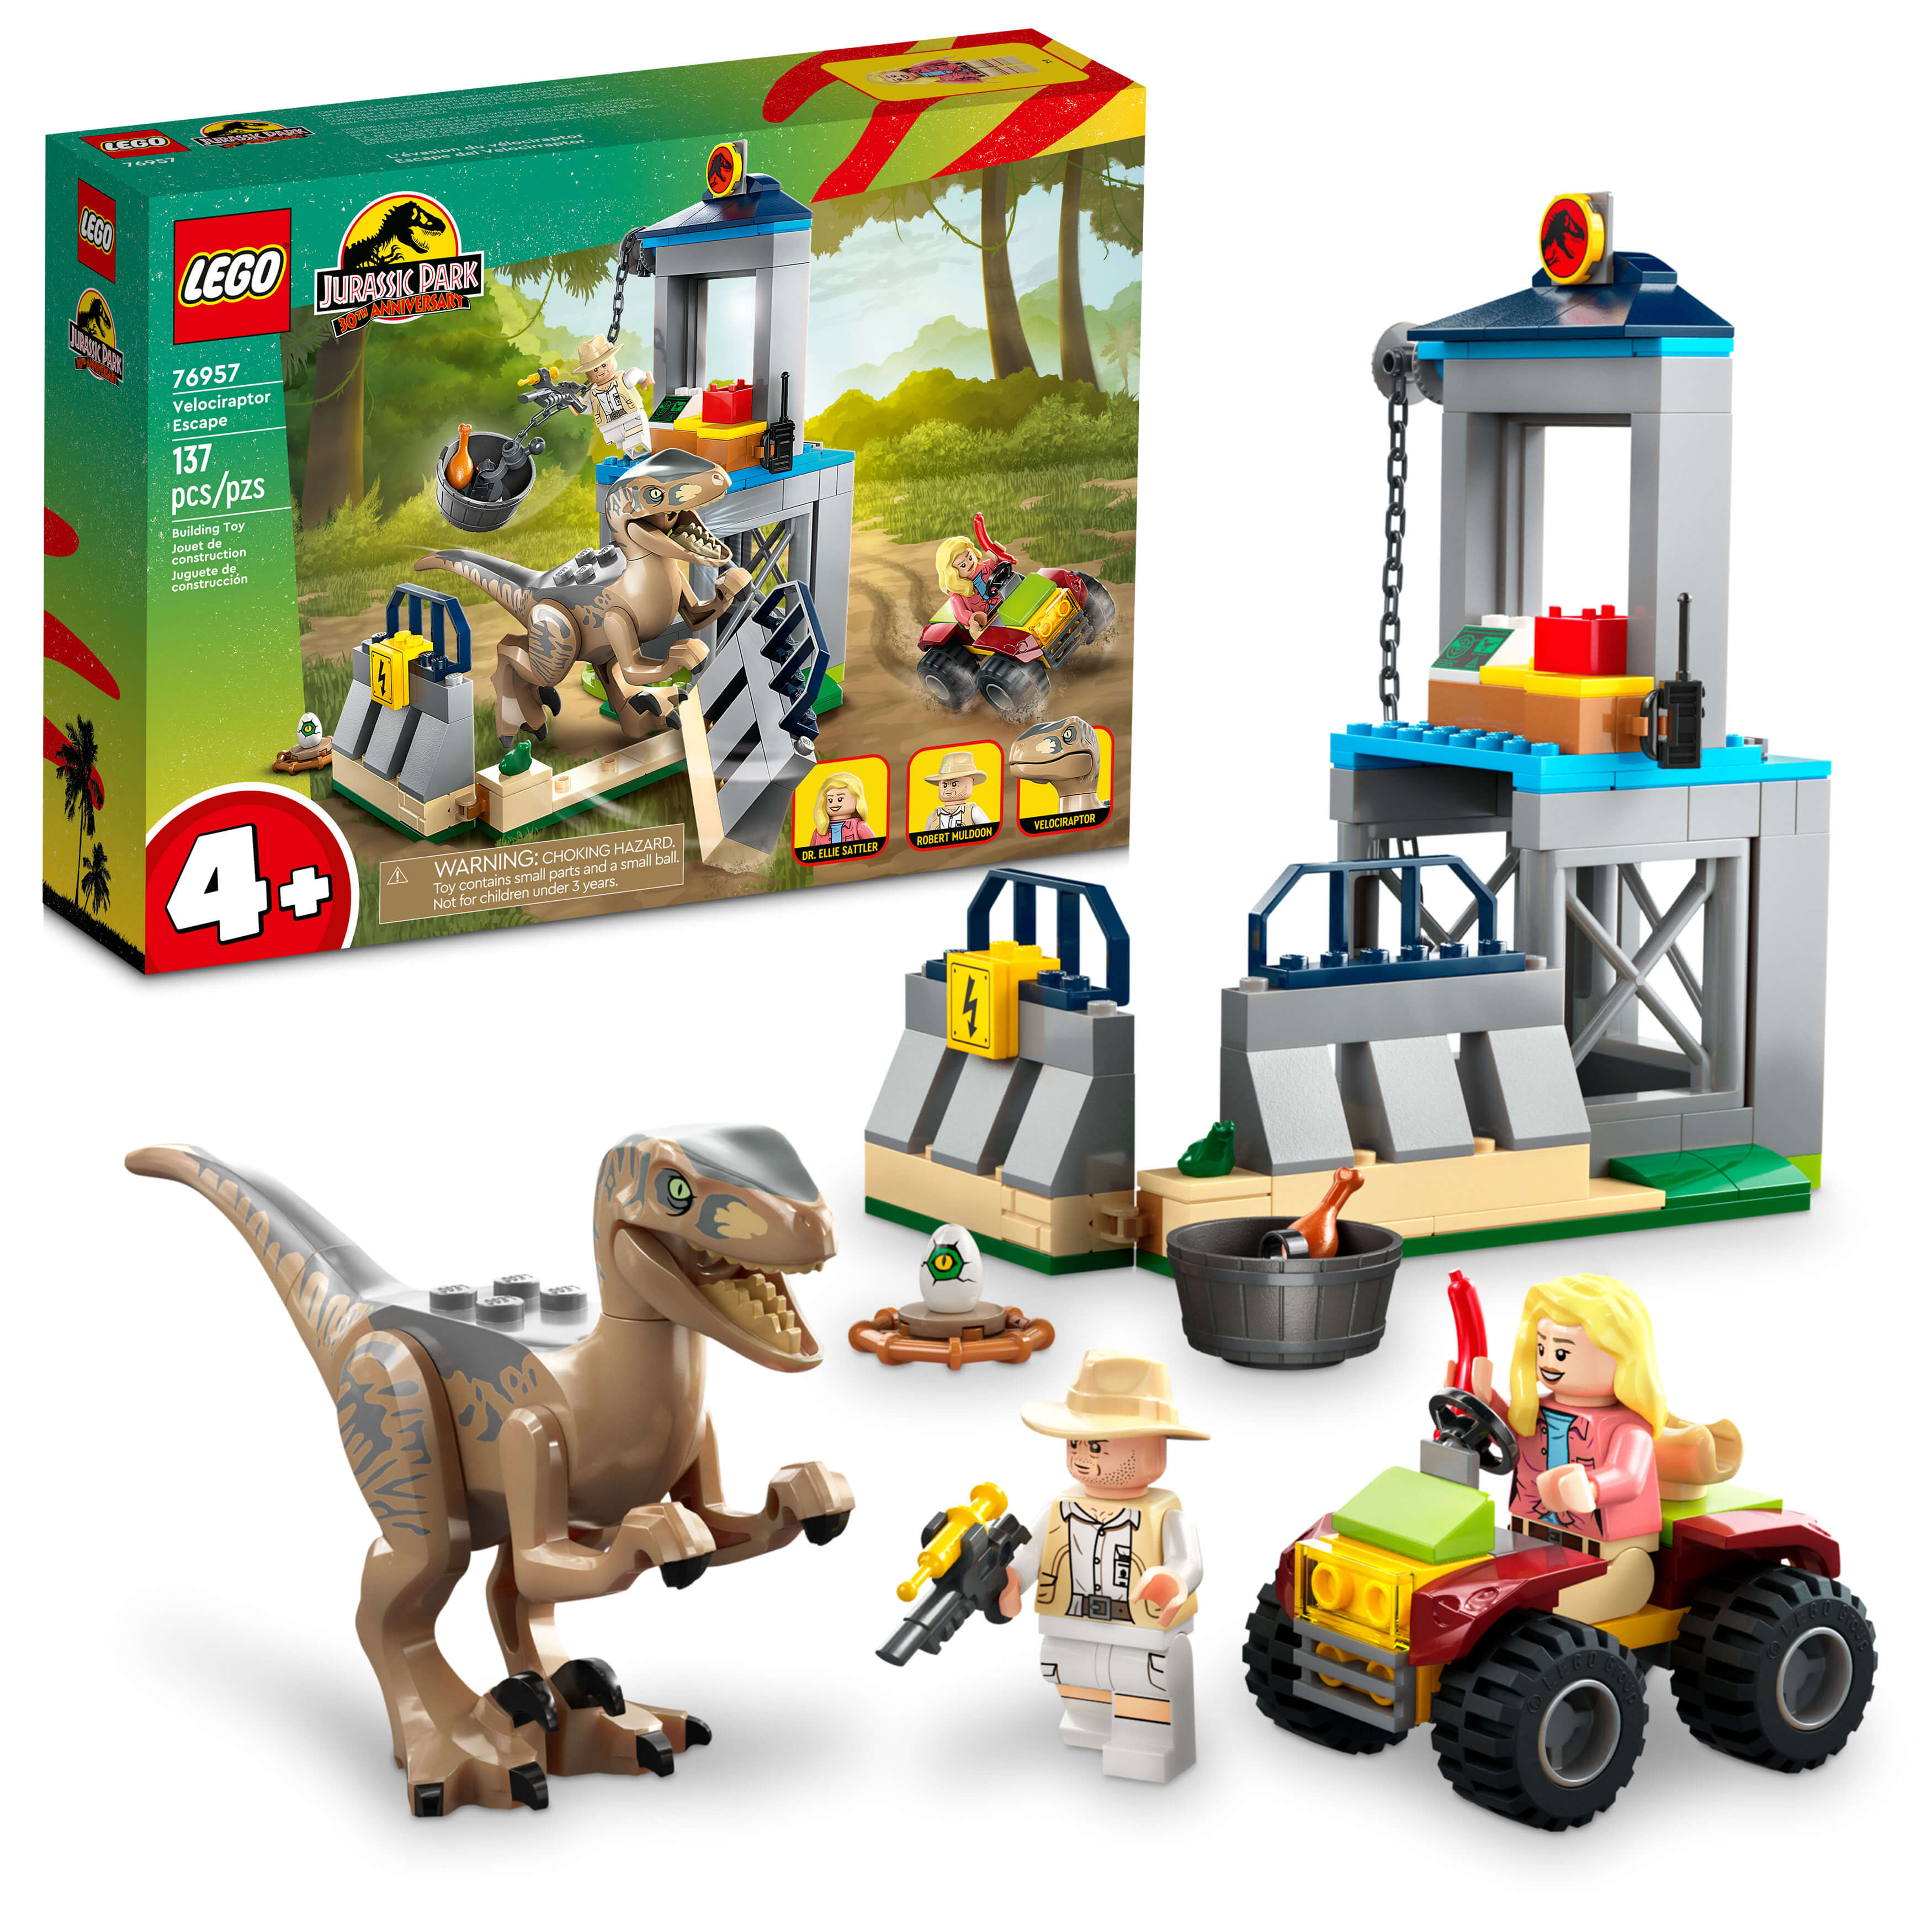 LEGO® Jurassic Park Velociraptor Escape 76957 Building Toy Set (137 Pieces)